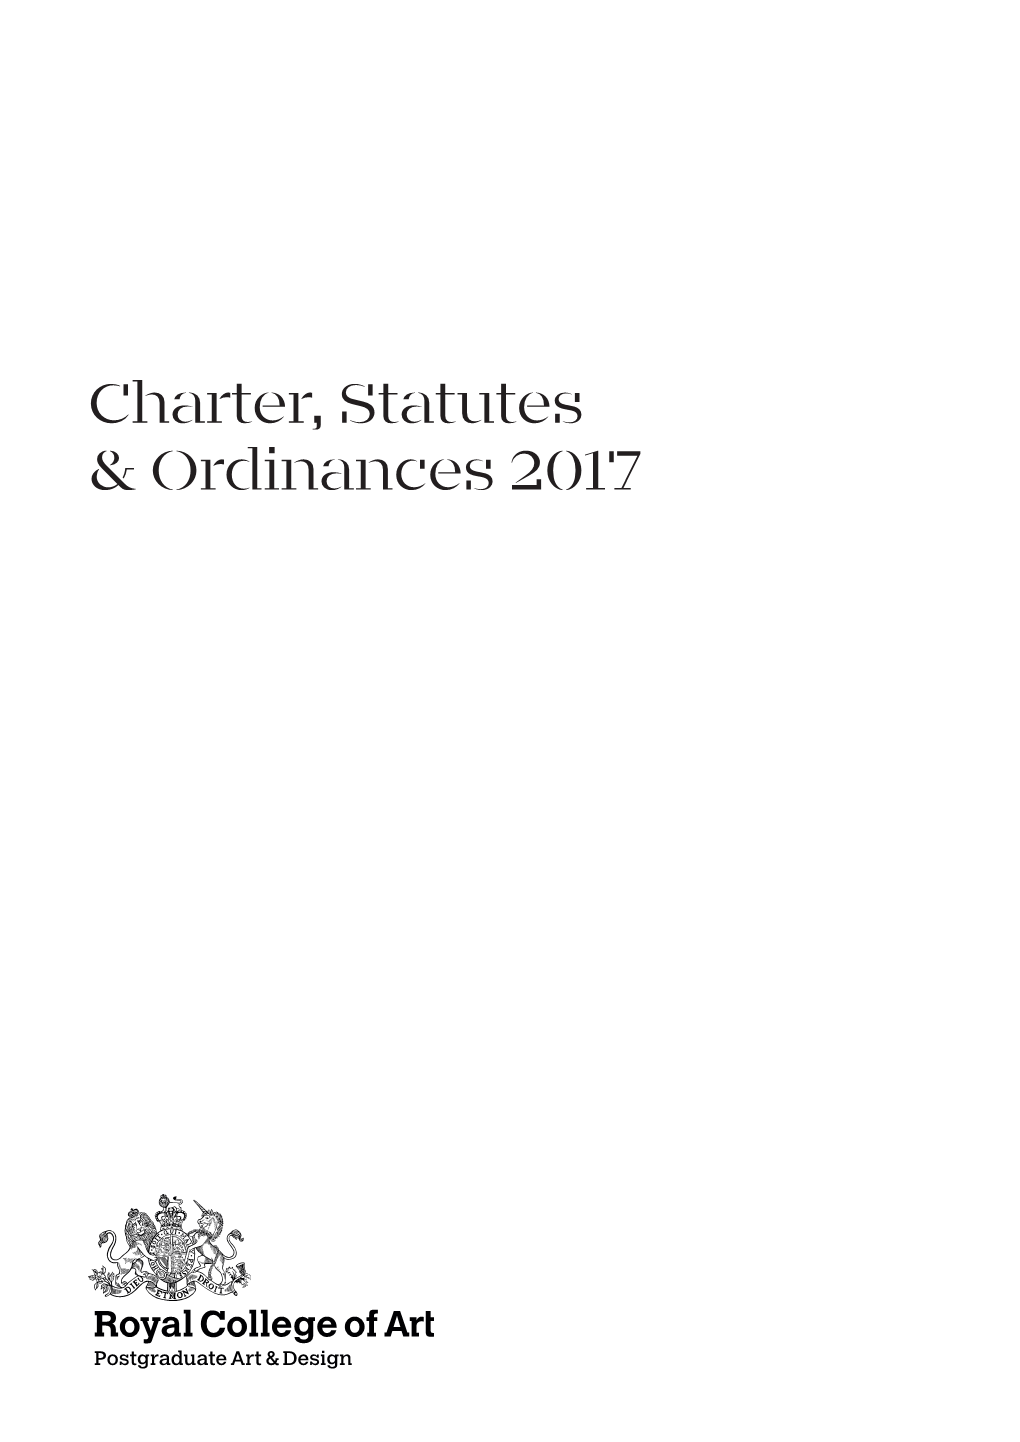 Charter, Statutes & Ordinances 2017